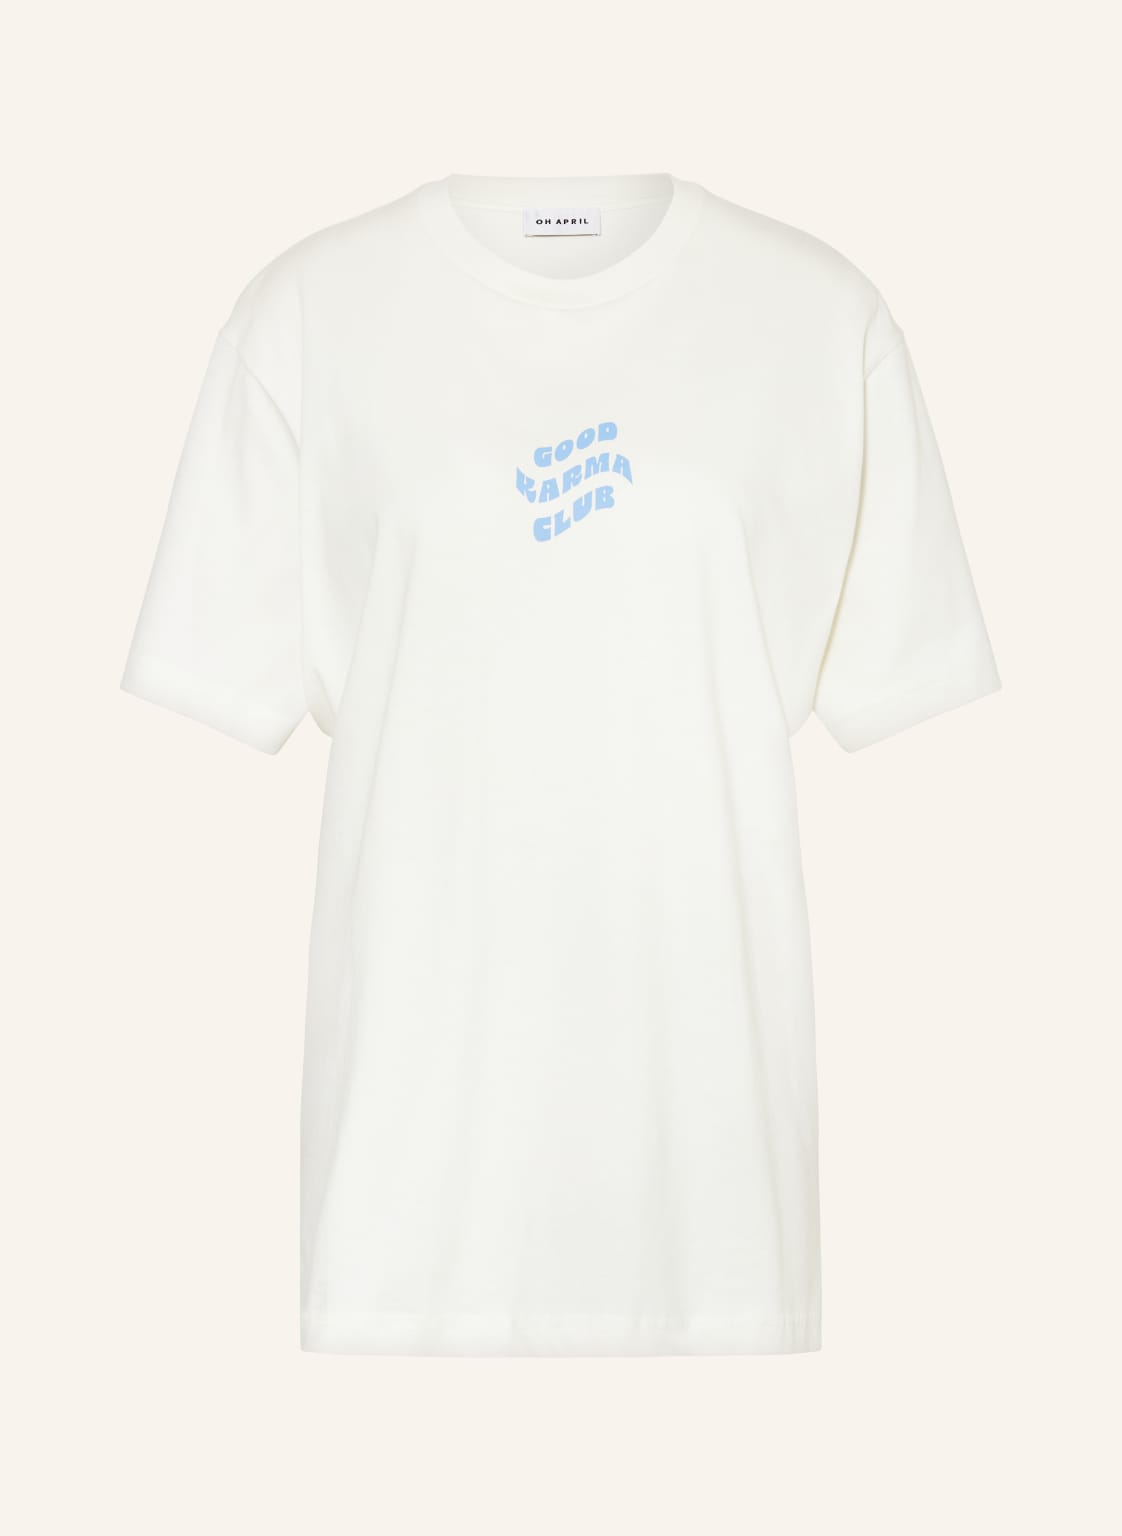 Oh April T-Shirt Good Karma Club weiss von OH APRIL